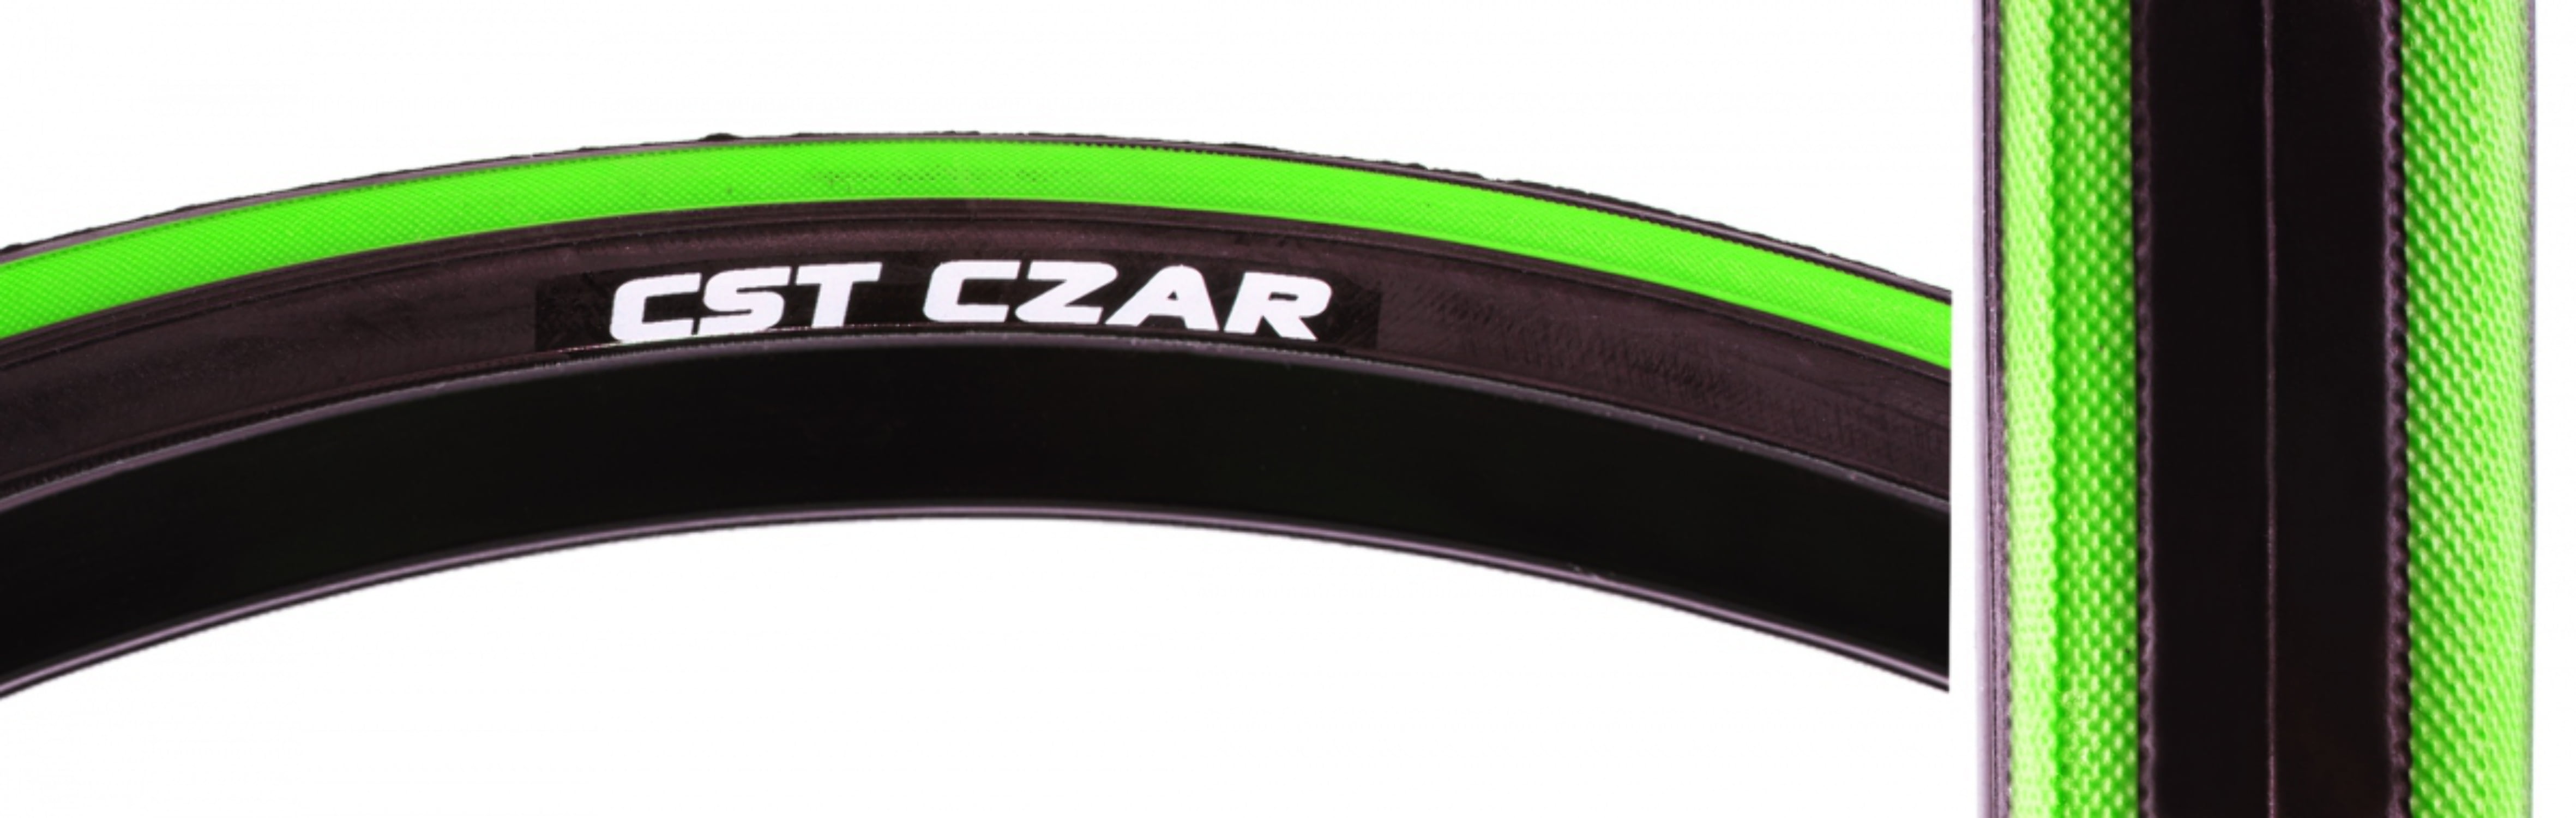 CST Czar Fixed Clincher Tire Road Gear Bike Race Comp 700x25c Lime Black Green